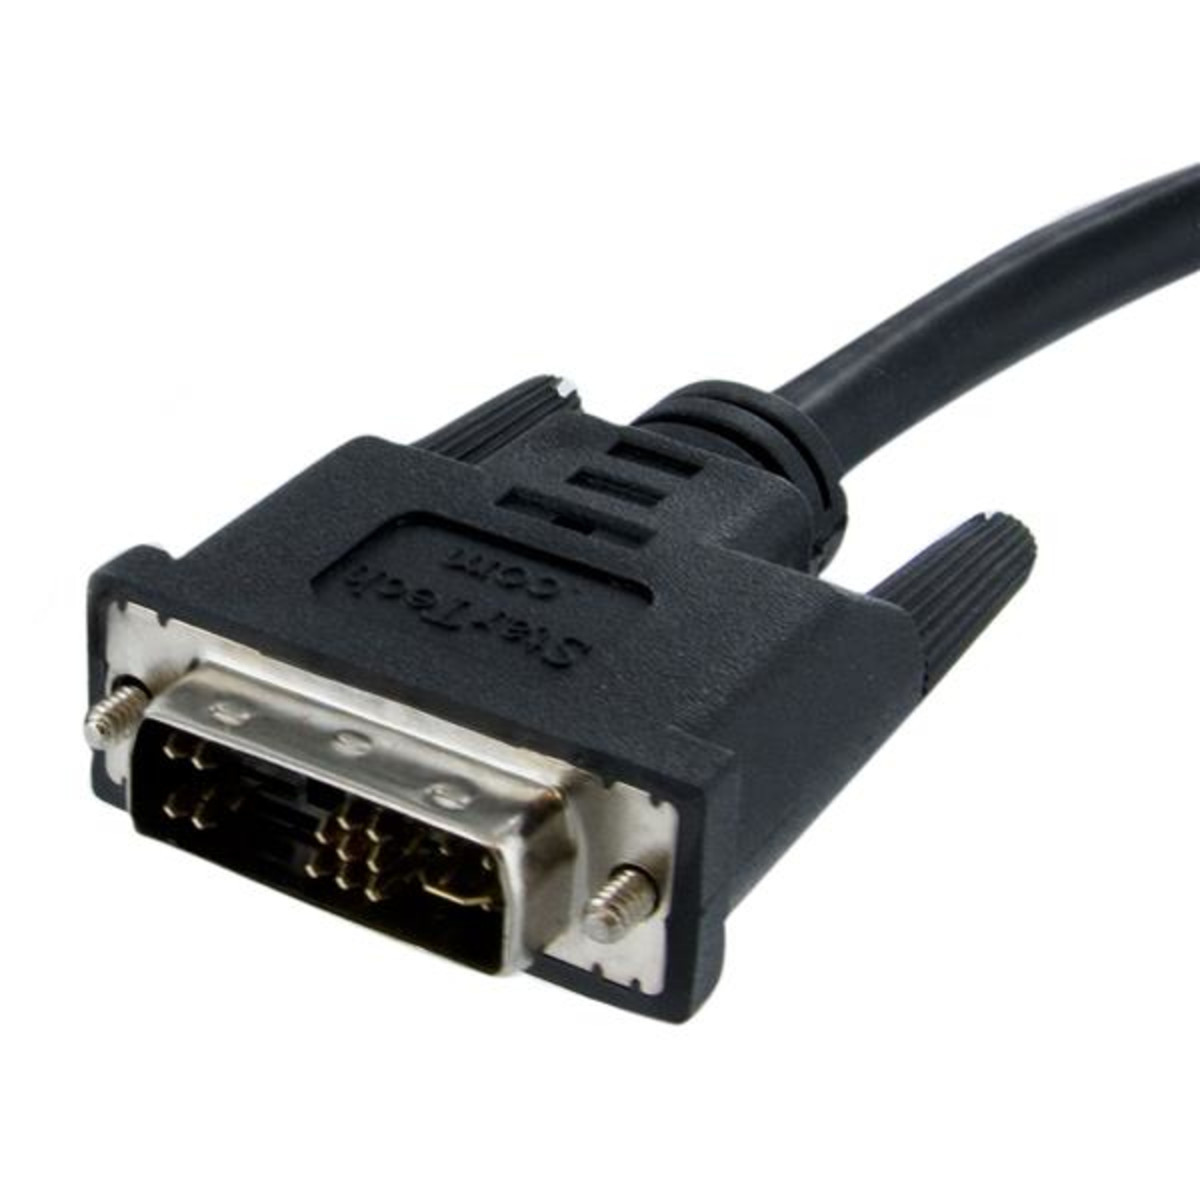 3m DVI to VGA Display Monitor Cable